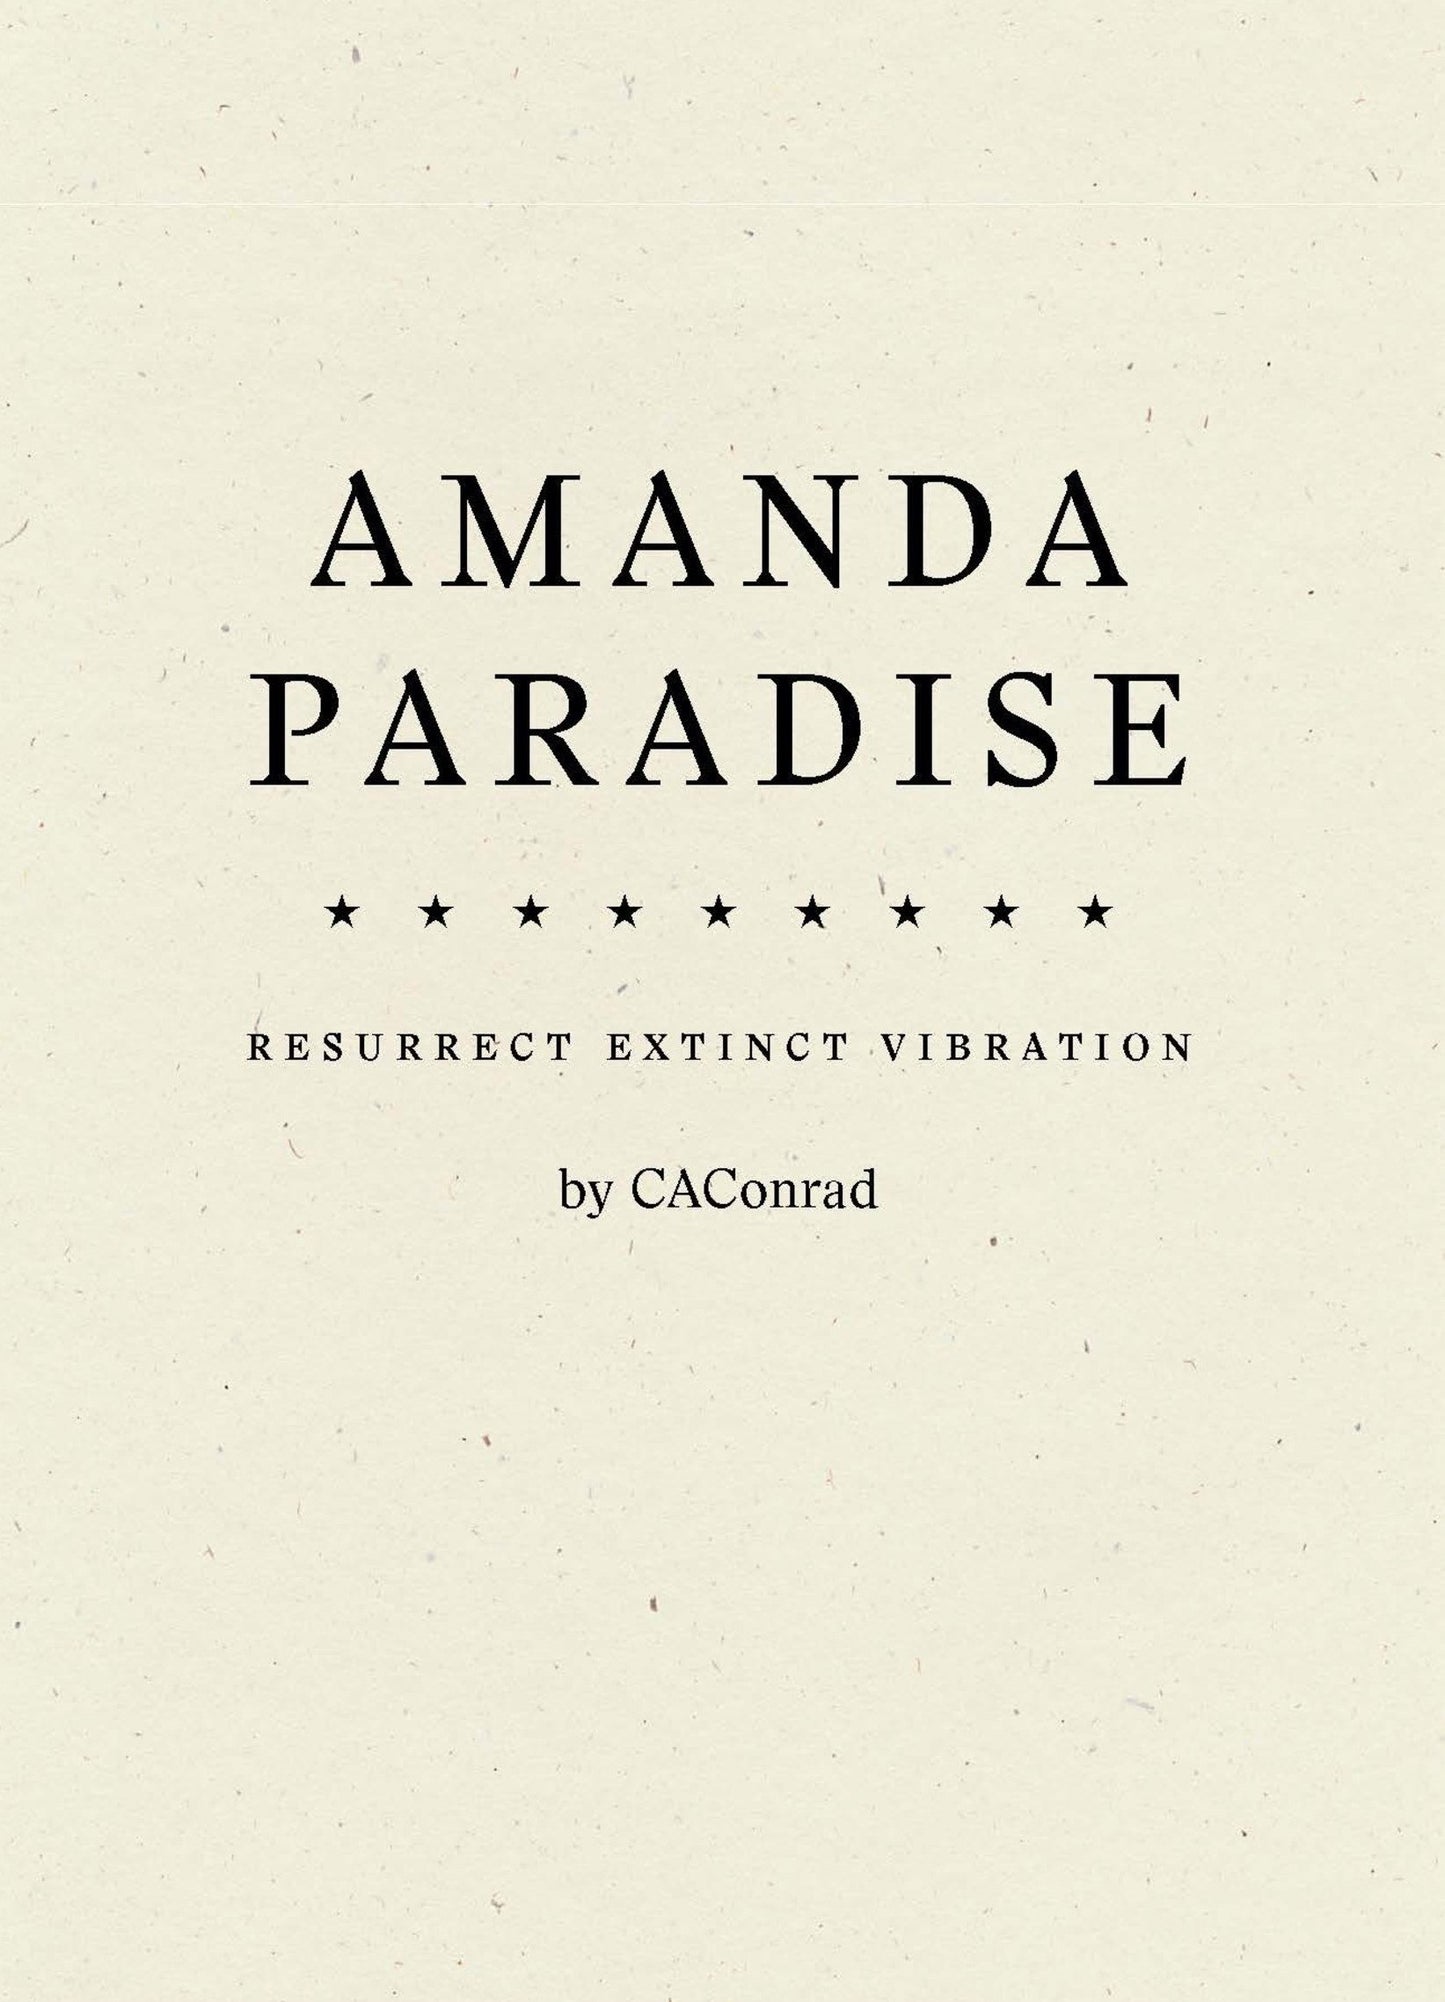 Amanda Paradise